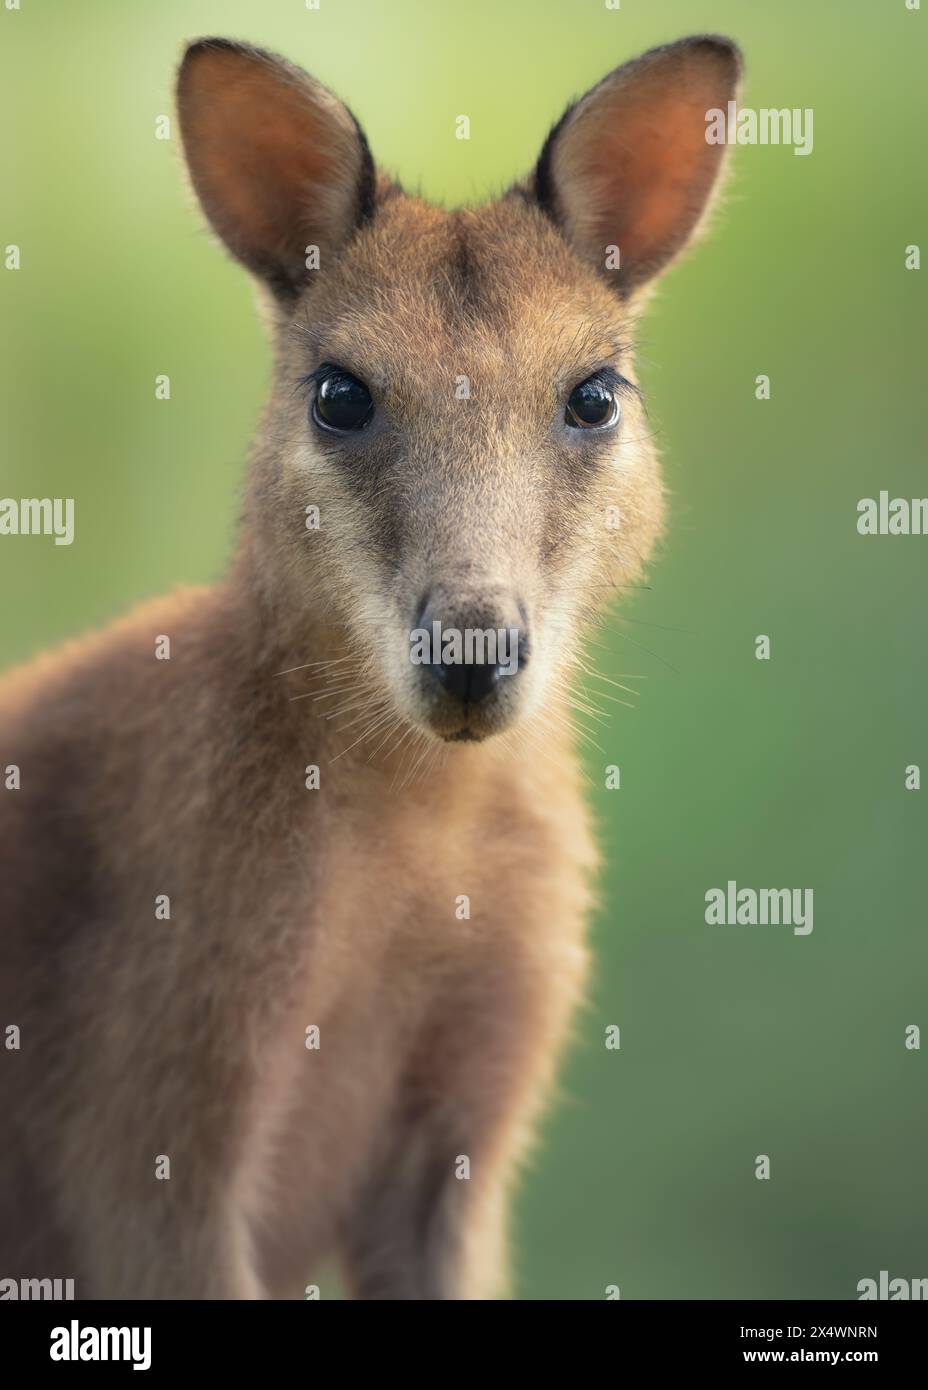 Close-up portrait of an agile wallaby (Macropus agilis jardinii) against a green background, Australia Stock Photo